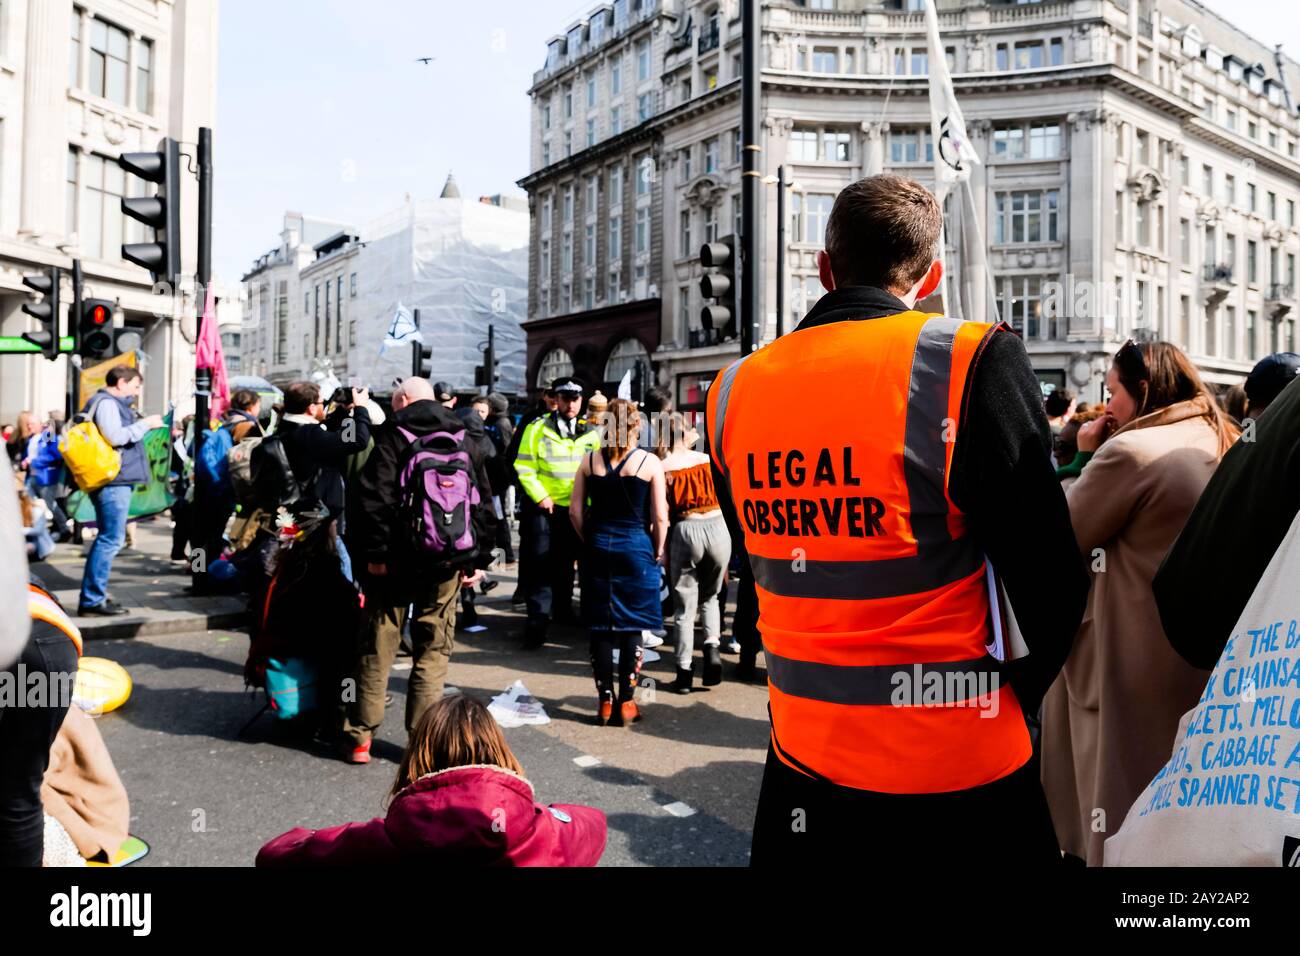 Londres, Reino Unido. Un manifestante con un tabard naranja con 'Legal Protester' escrito en él observa una protesta en Oxford Circus. Londres se paraliza Foto de stock